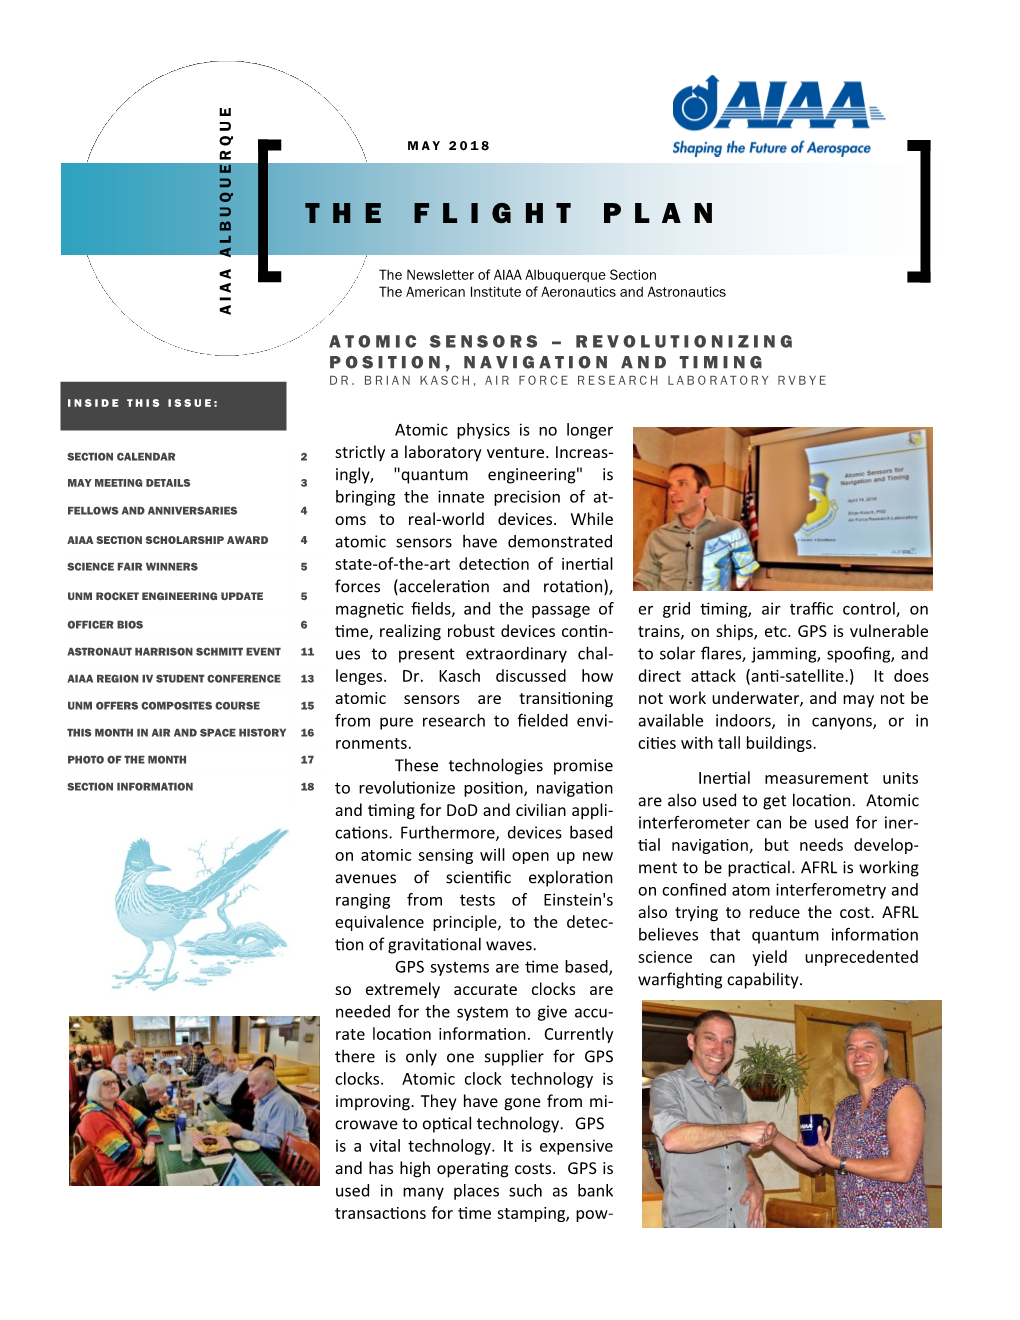 The Flight Plan